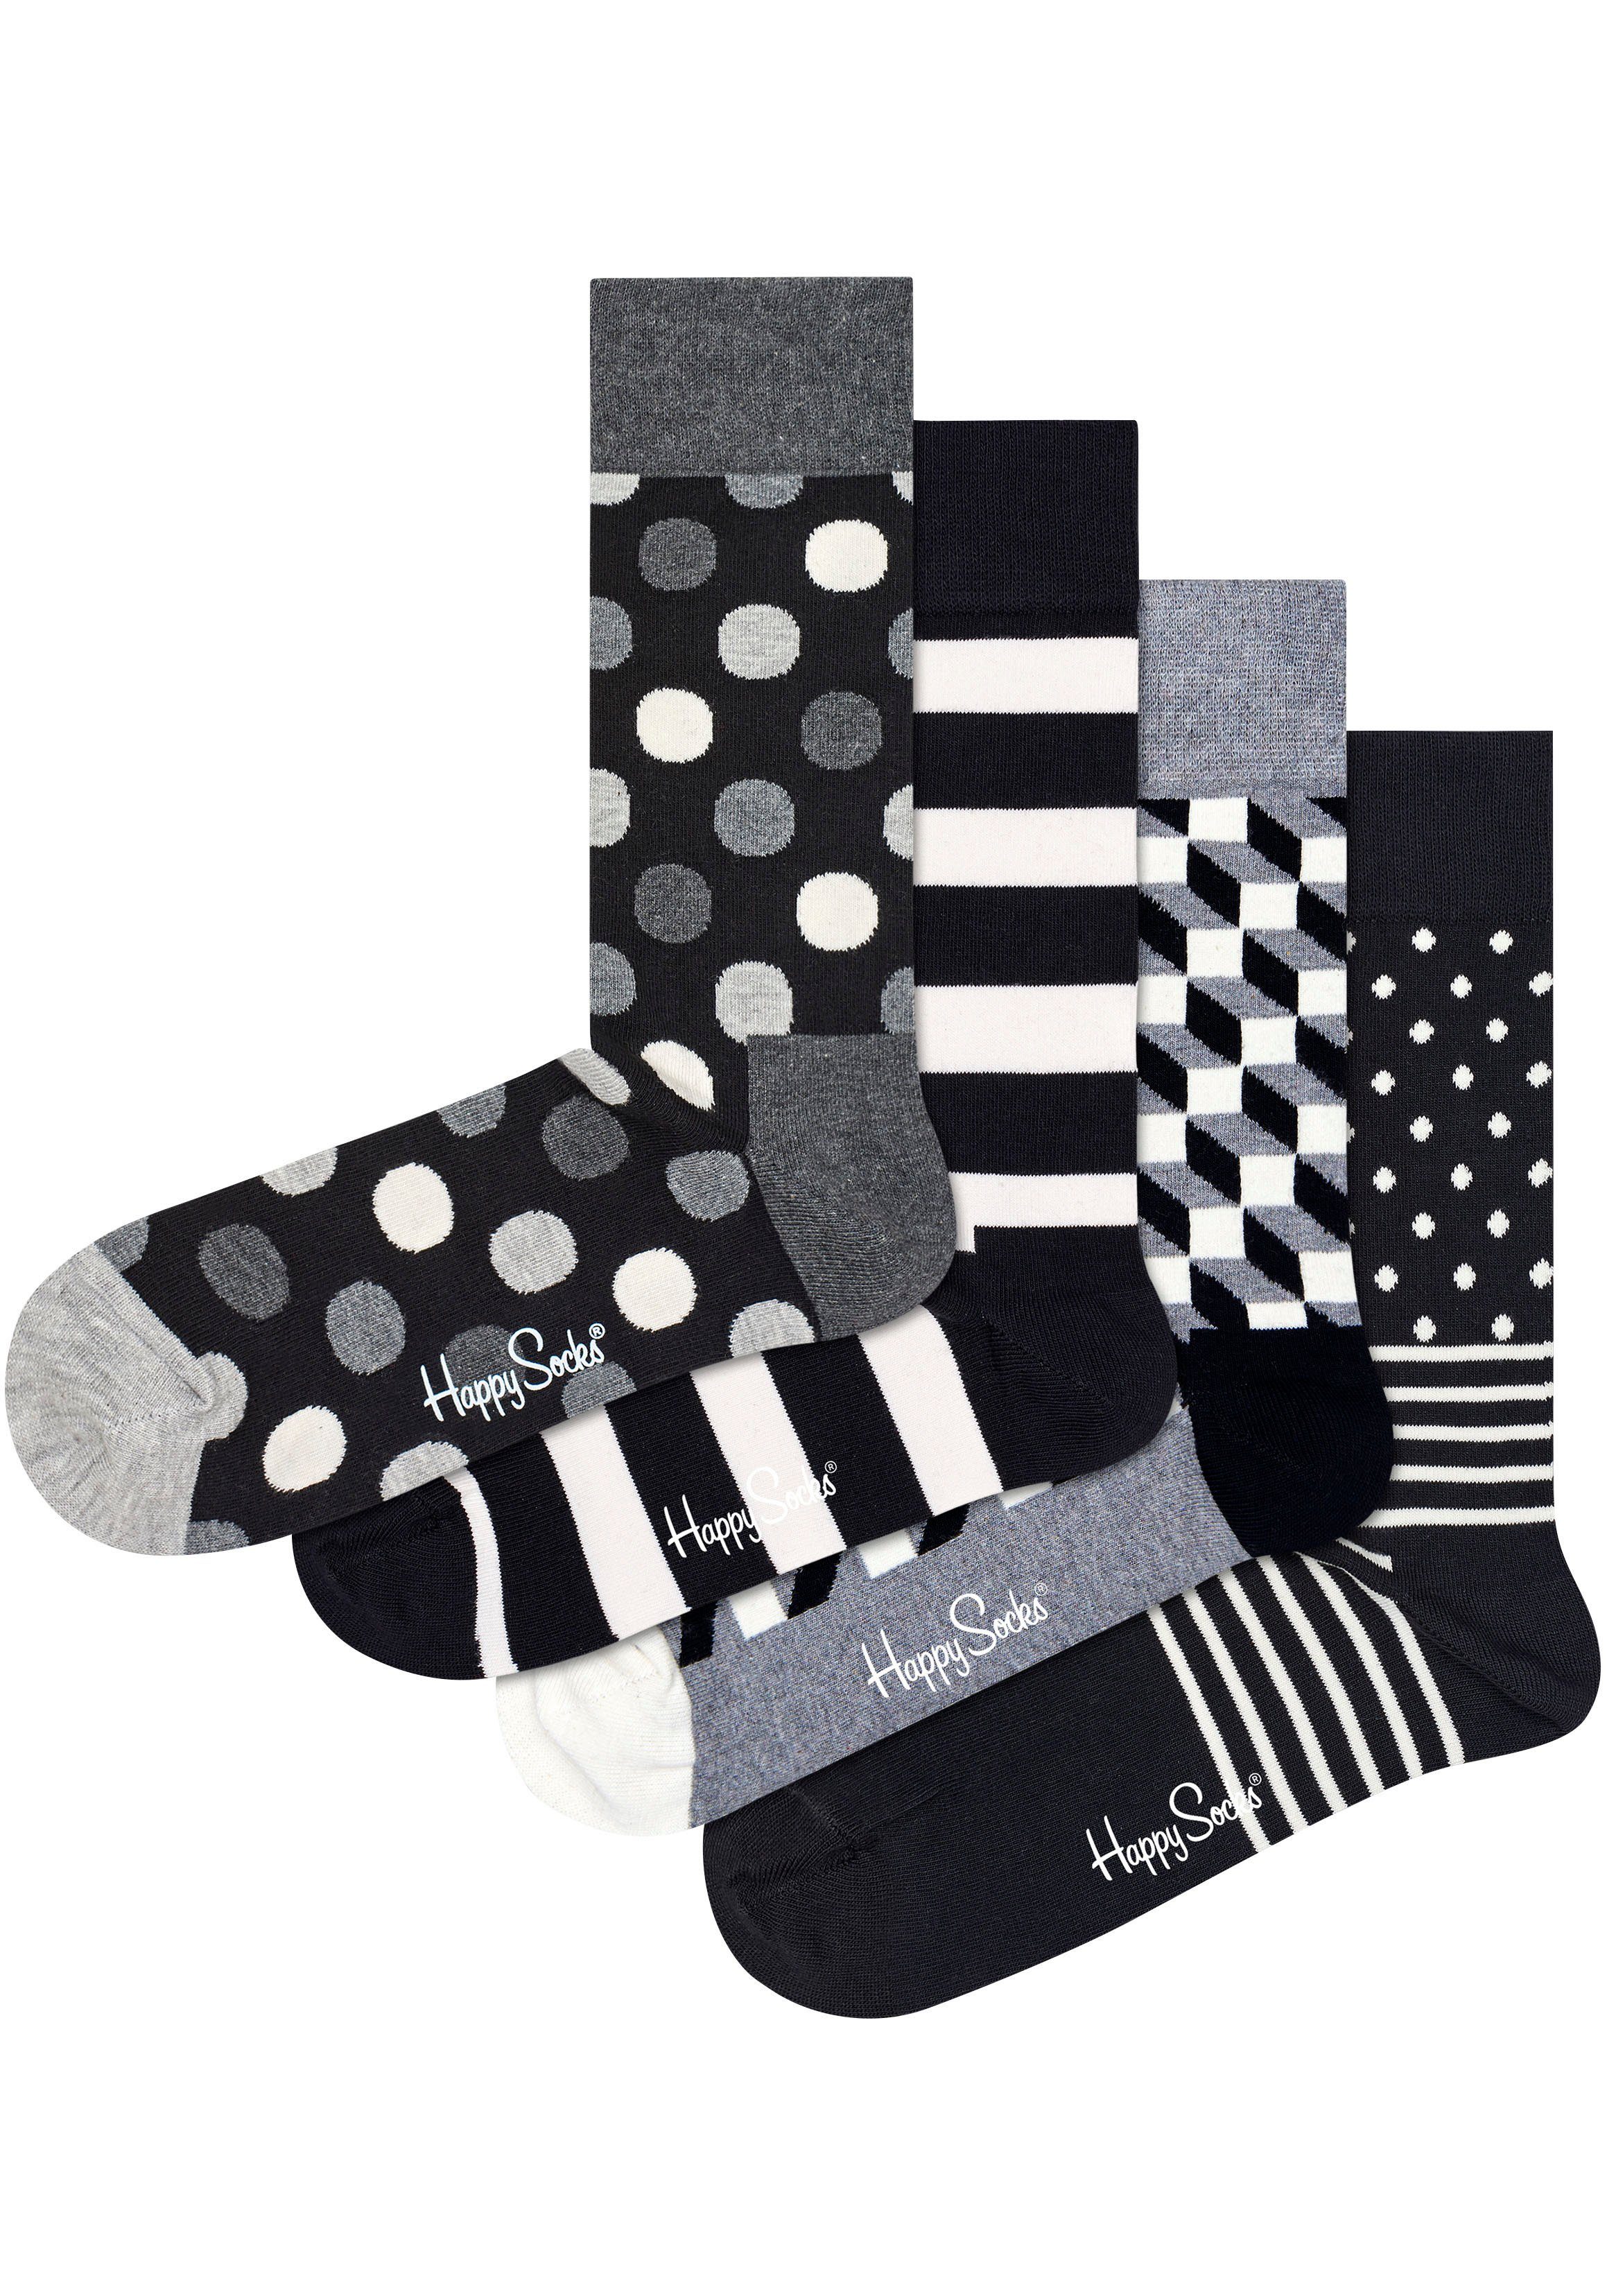 Gift Classic 4-Paar) grey dark & Black Socken Set White Happy Socks (Packung, Socks